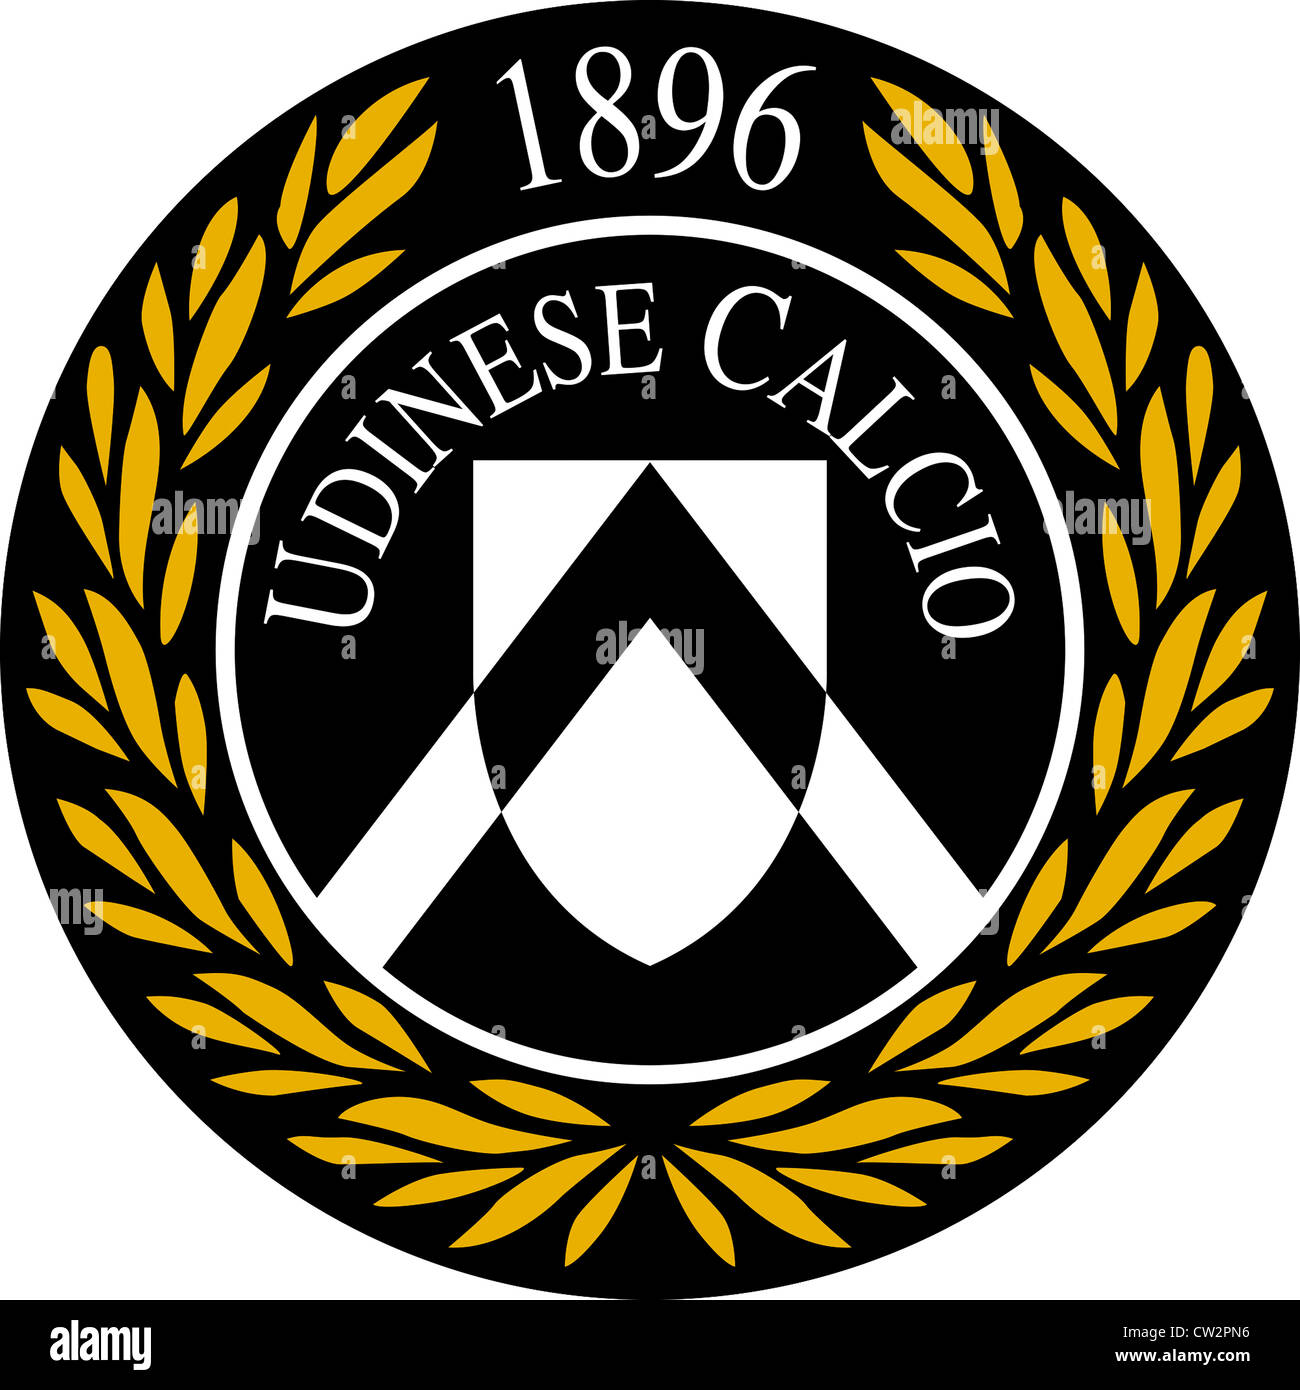 Logo of Italian football team Udinese Calcio Stock Photo - Alamy